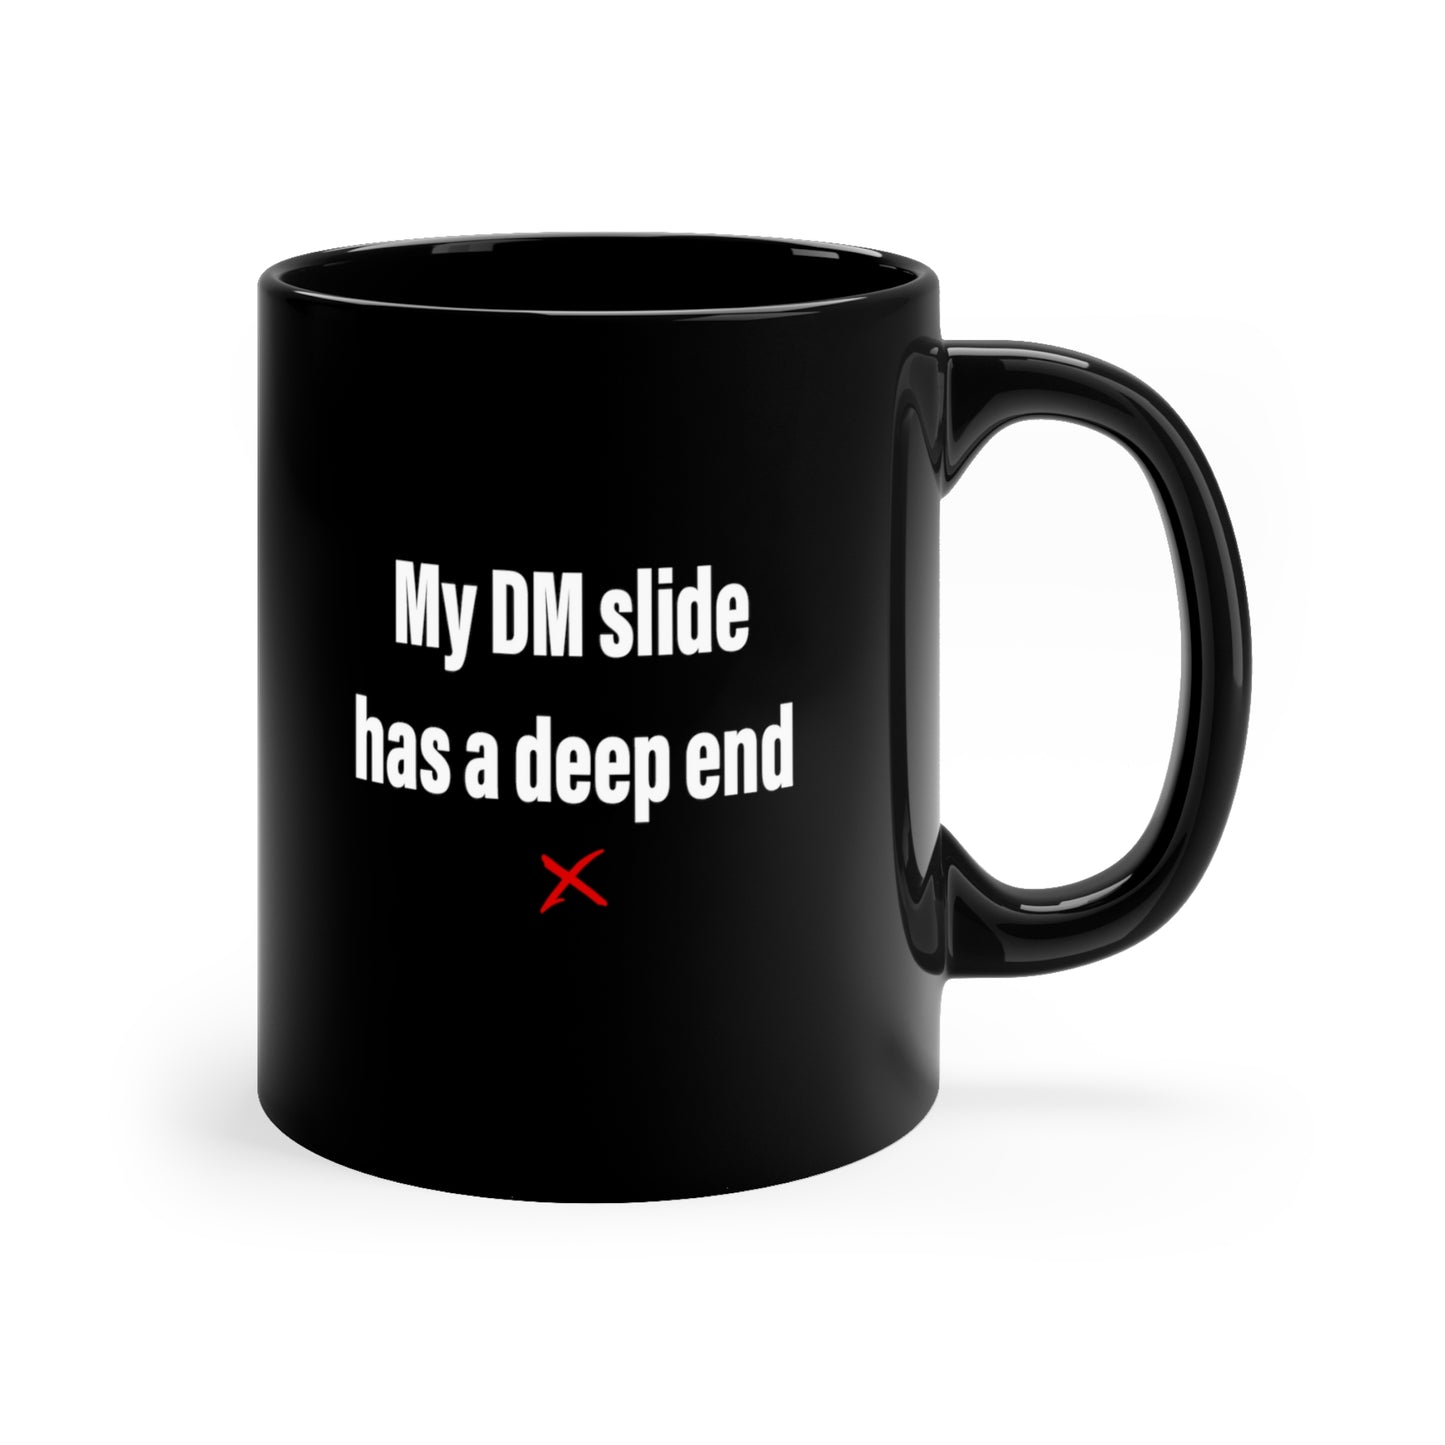 My DM slide has a deep end - Mug